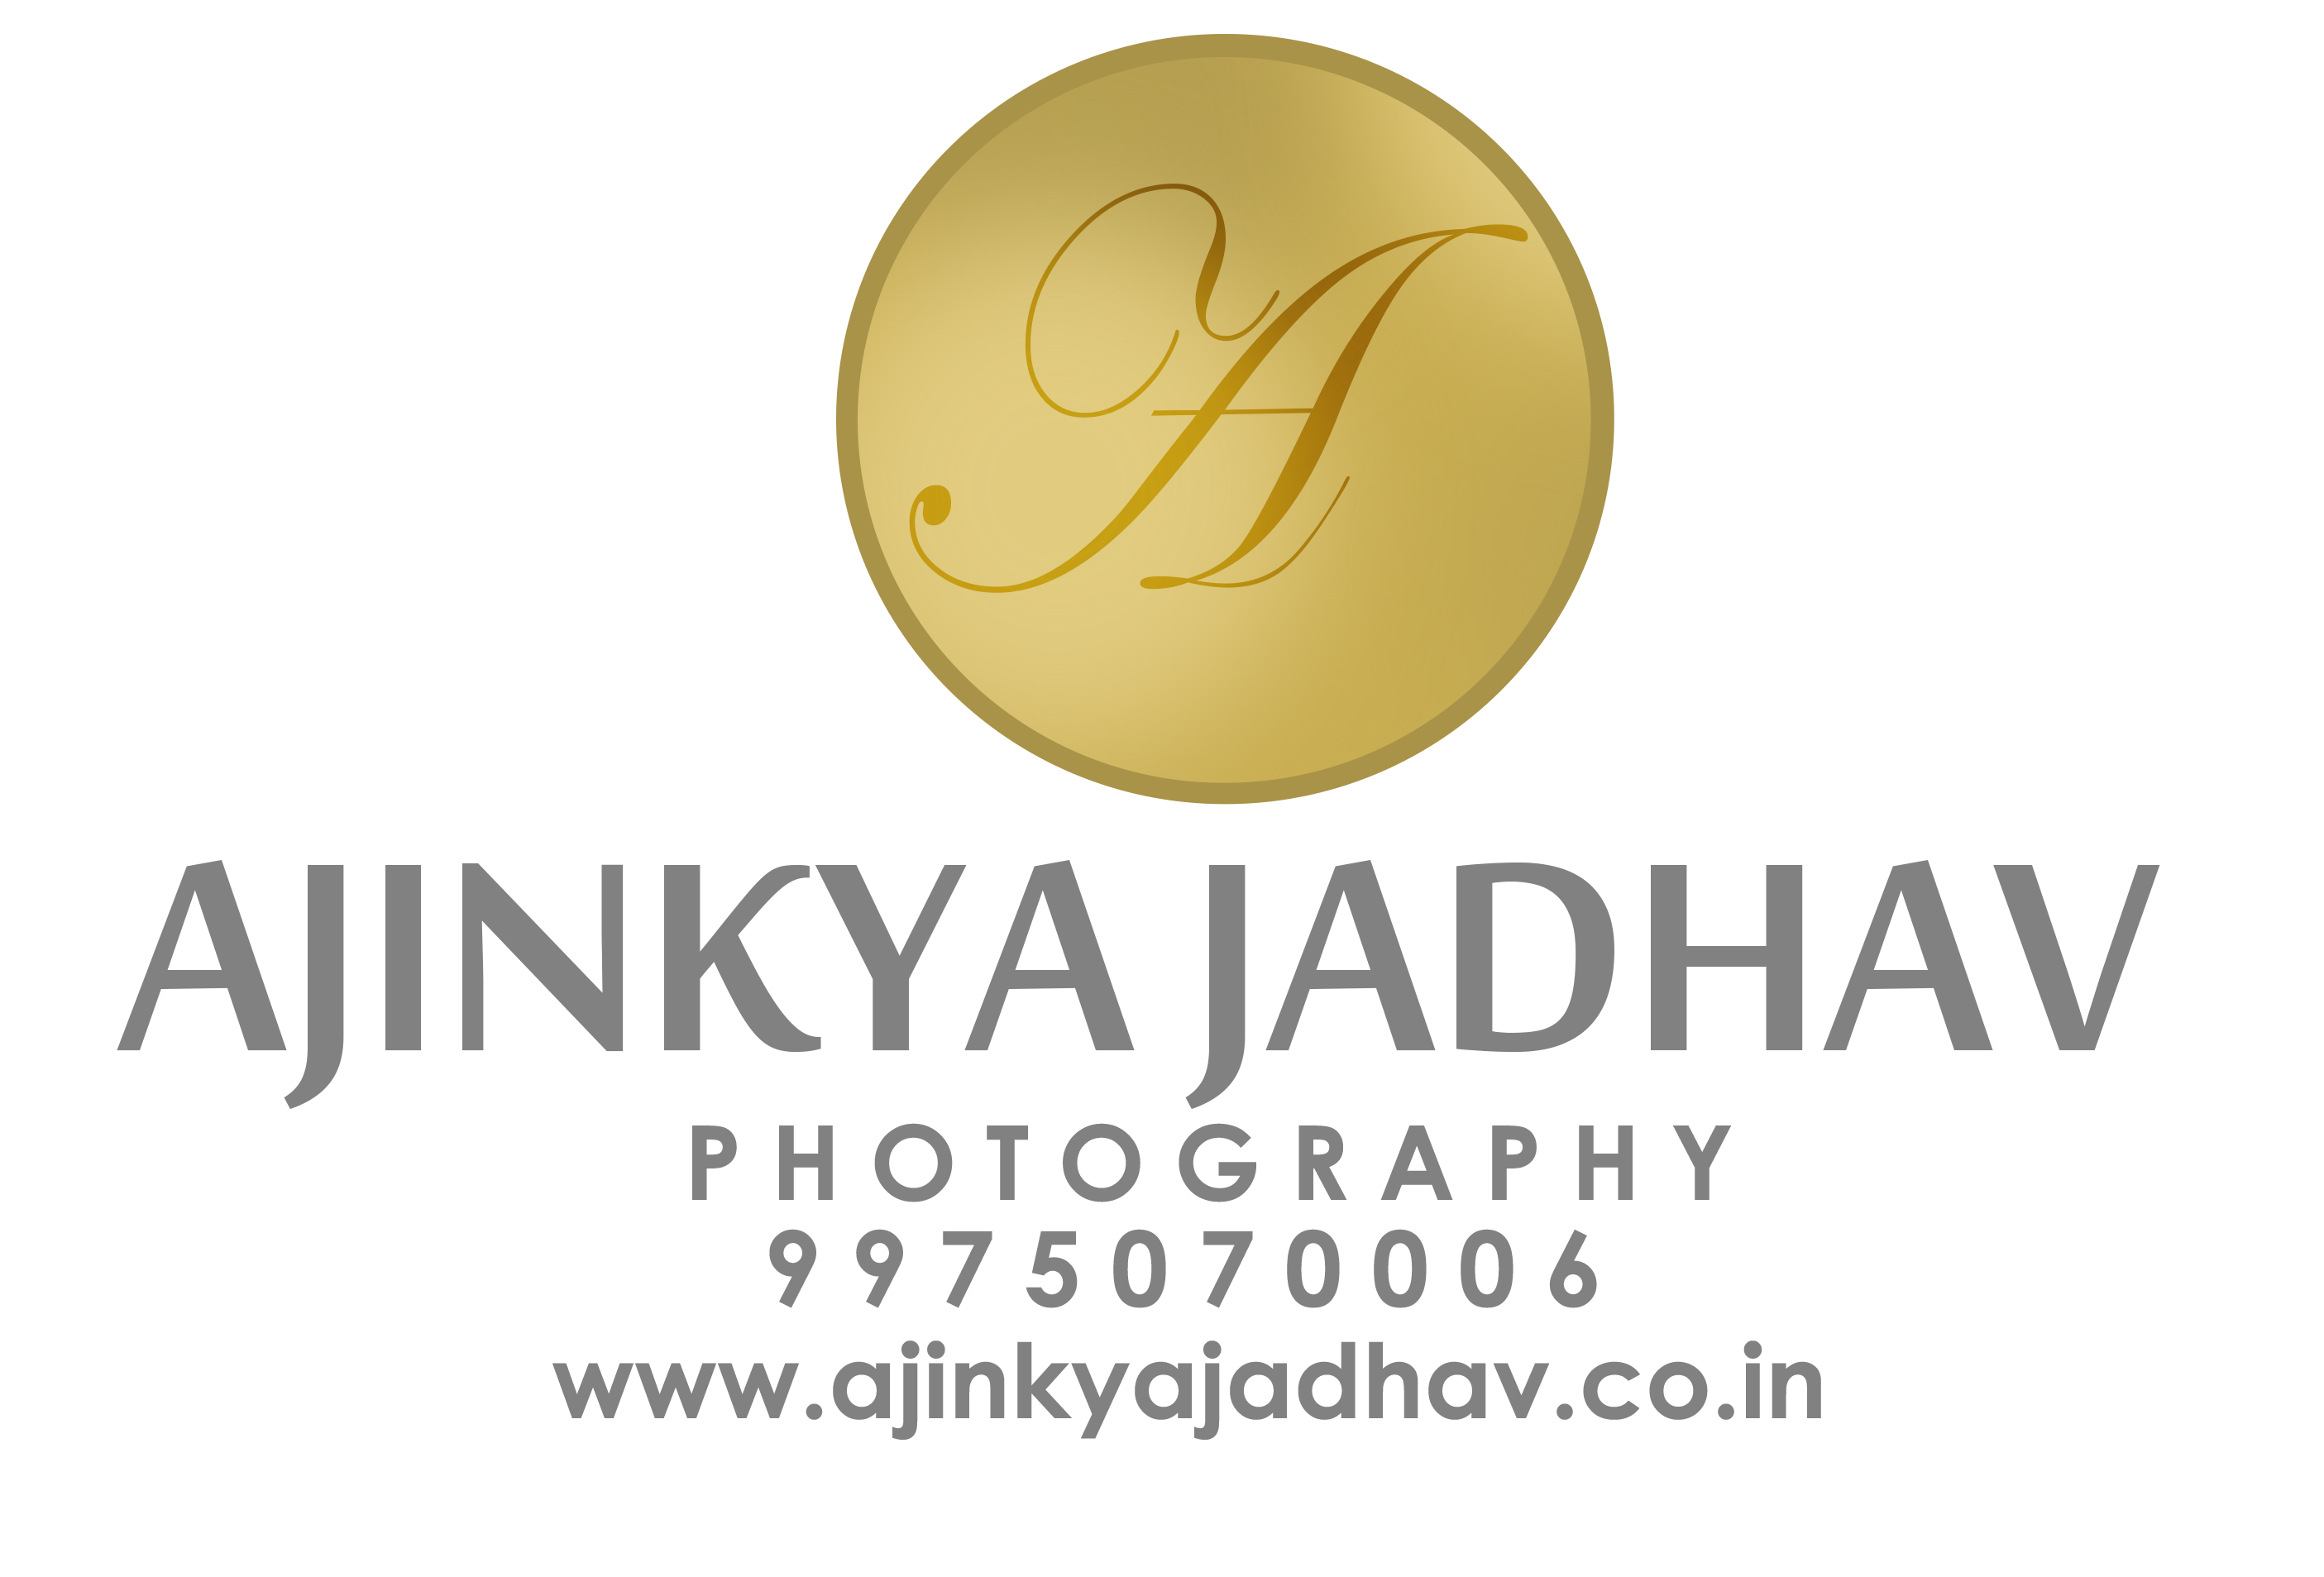 Ajinkya Jadhav Photography|Photographer|Event Services